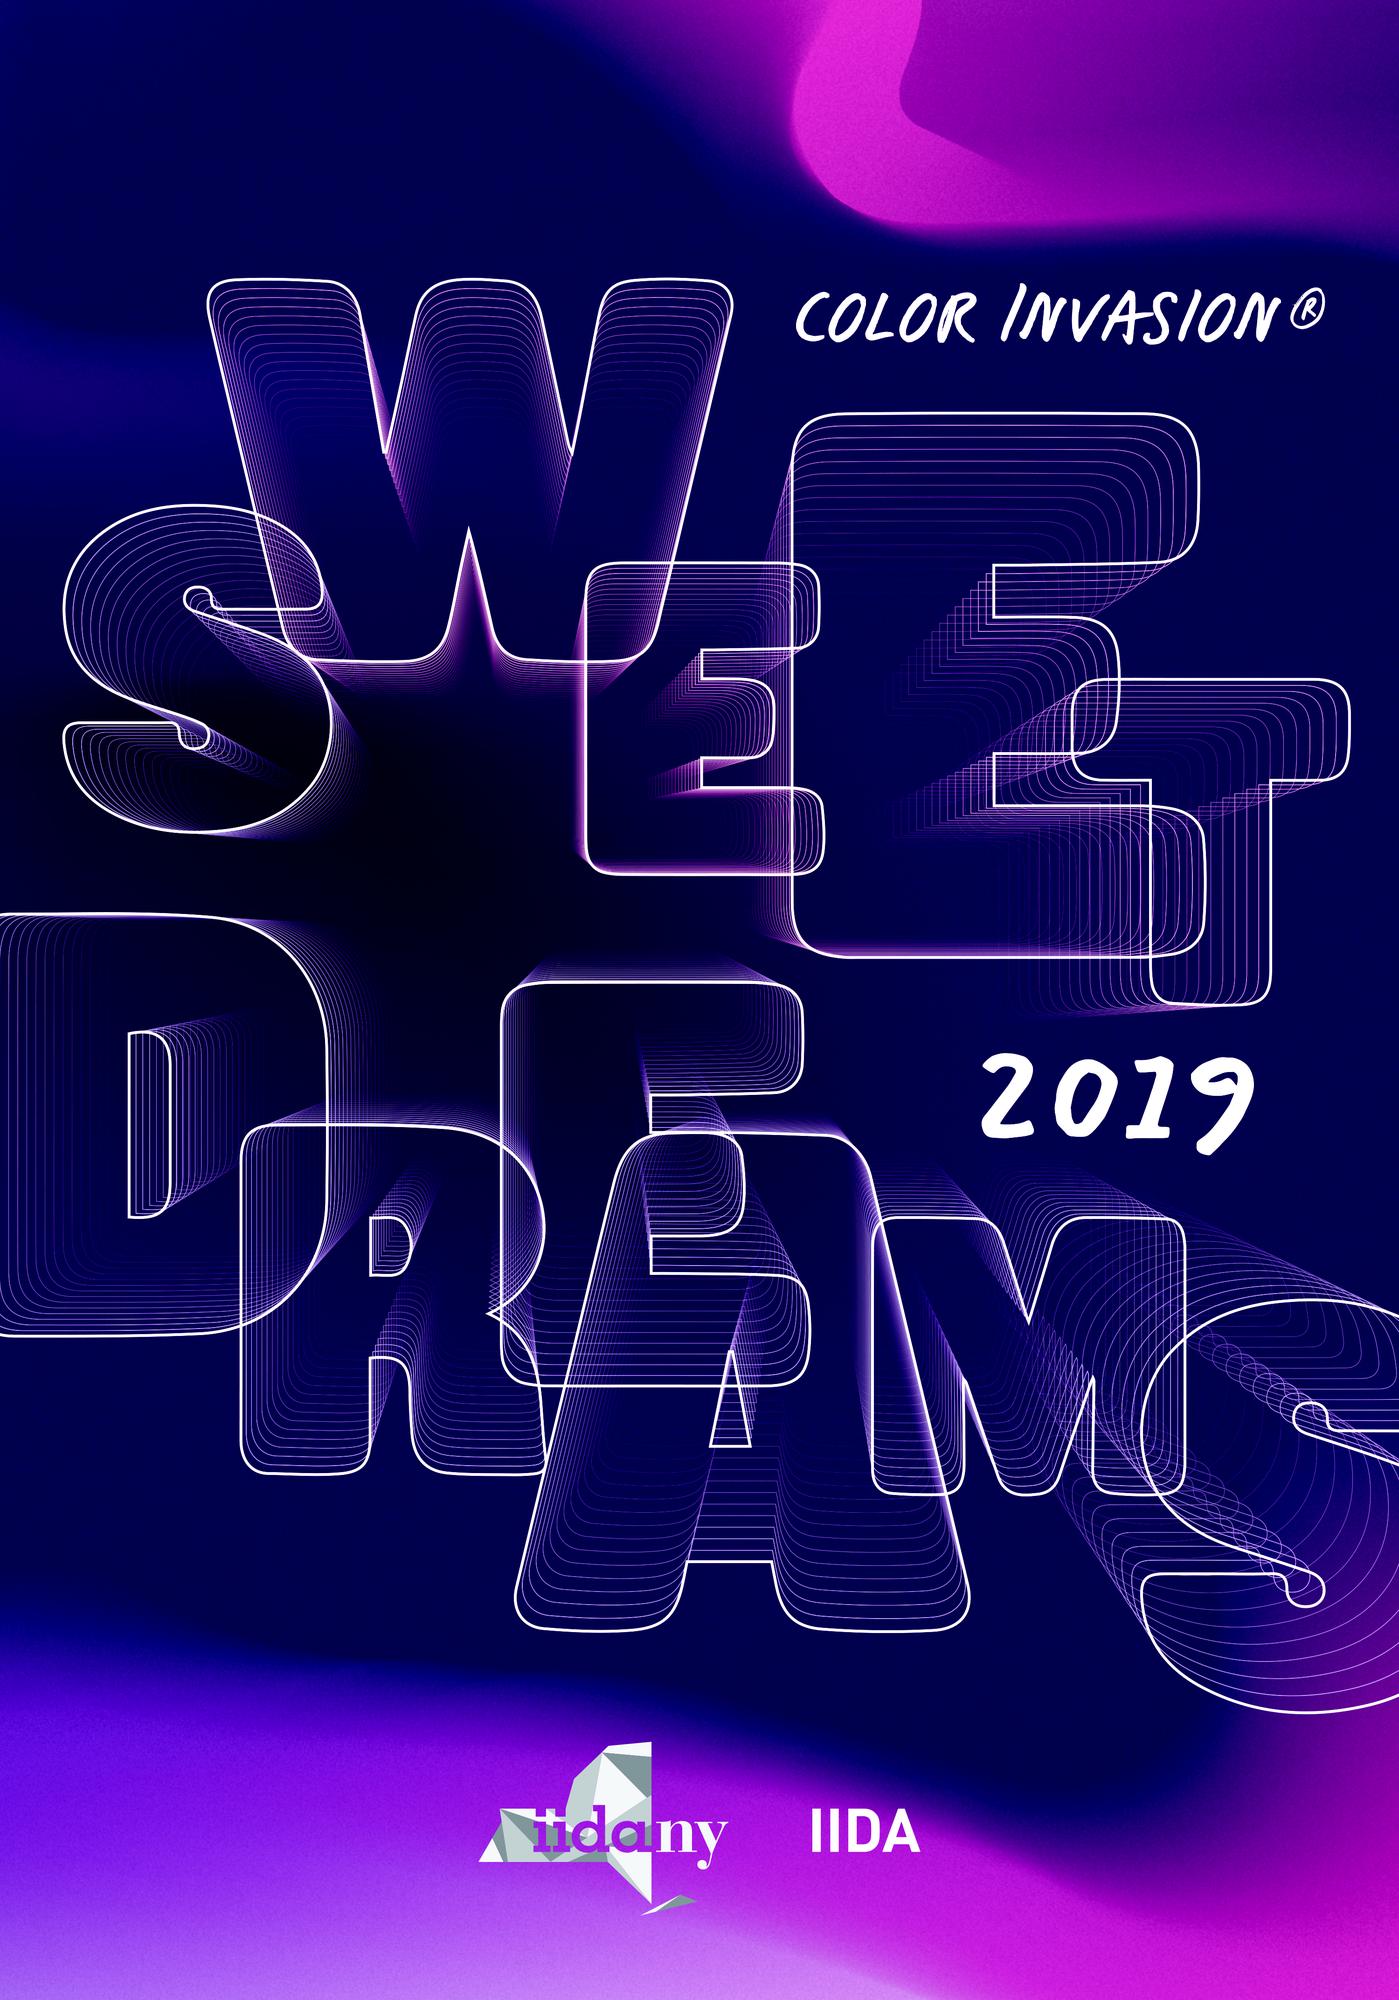 COLOR INVASION® 2019 SWEET DREAMS IIDA NY Chapter